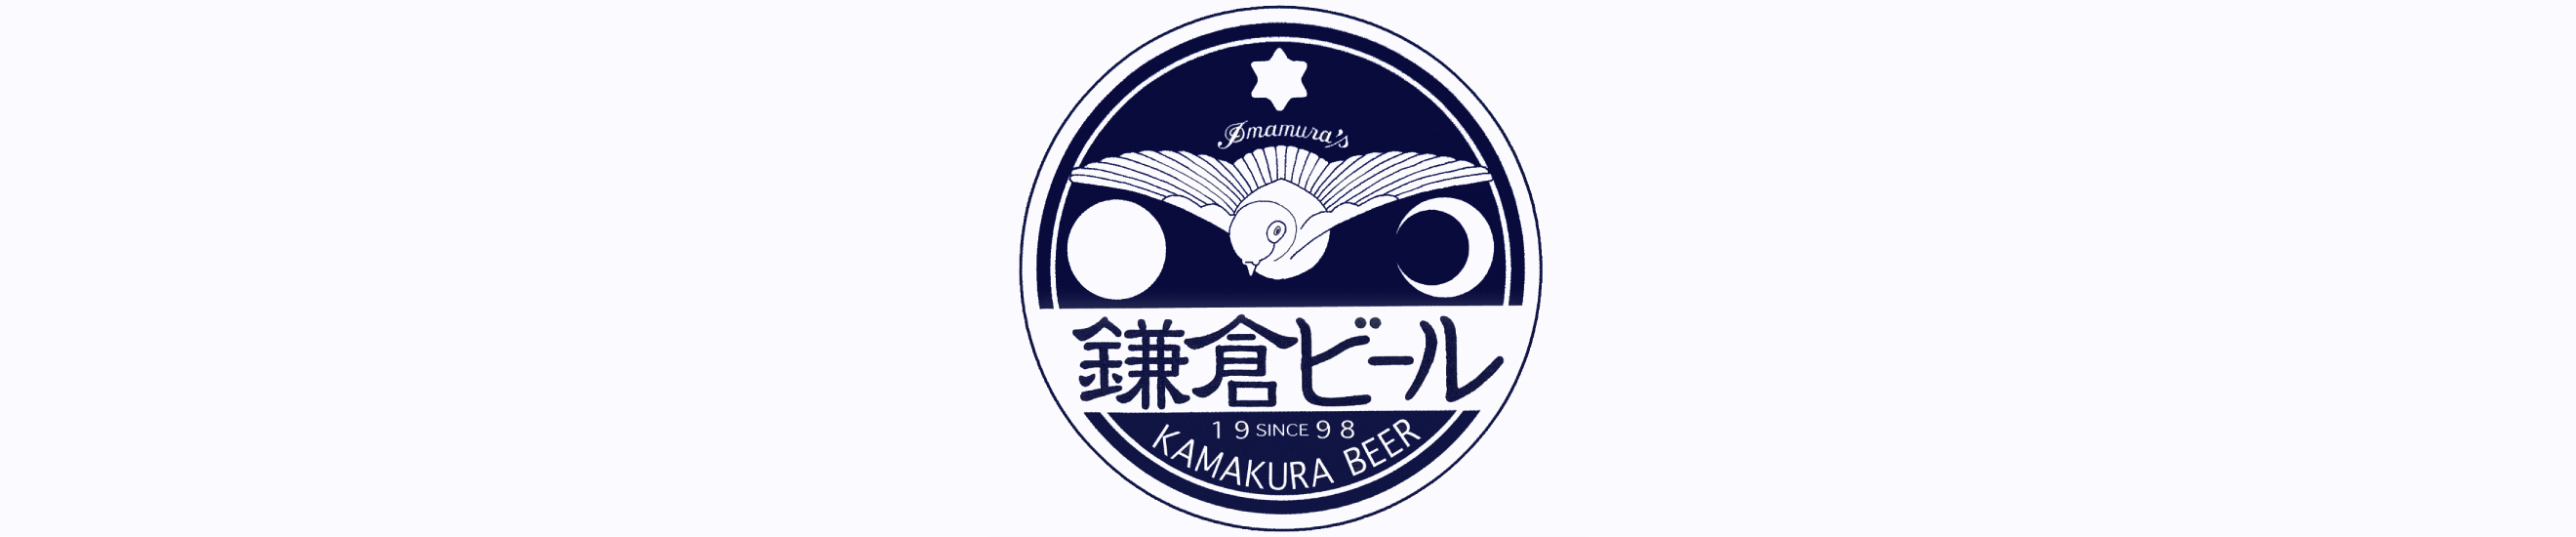 鎌倉ビール醸造株式会社